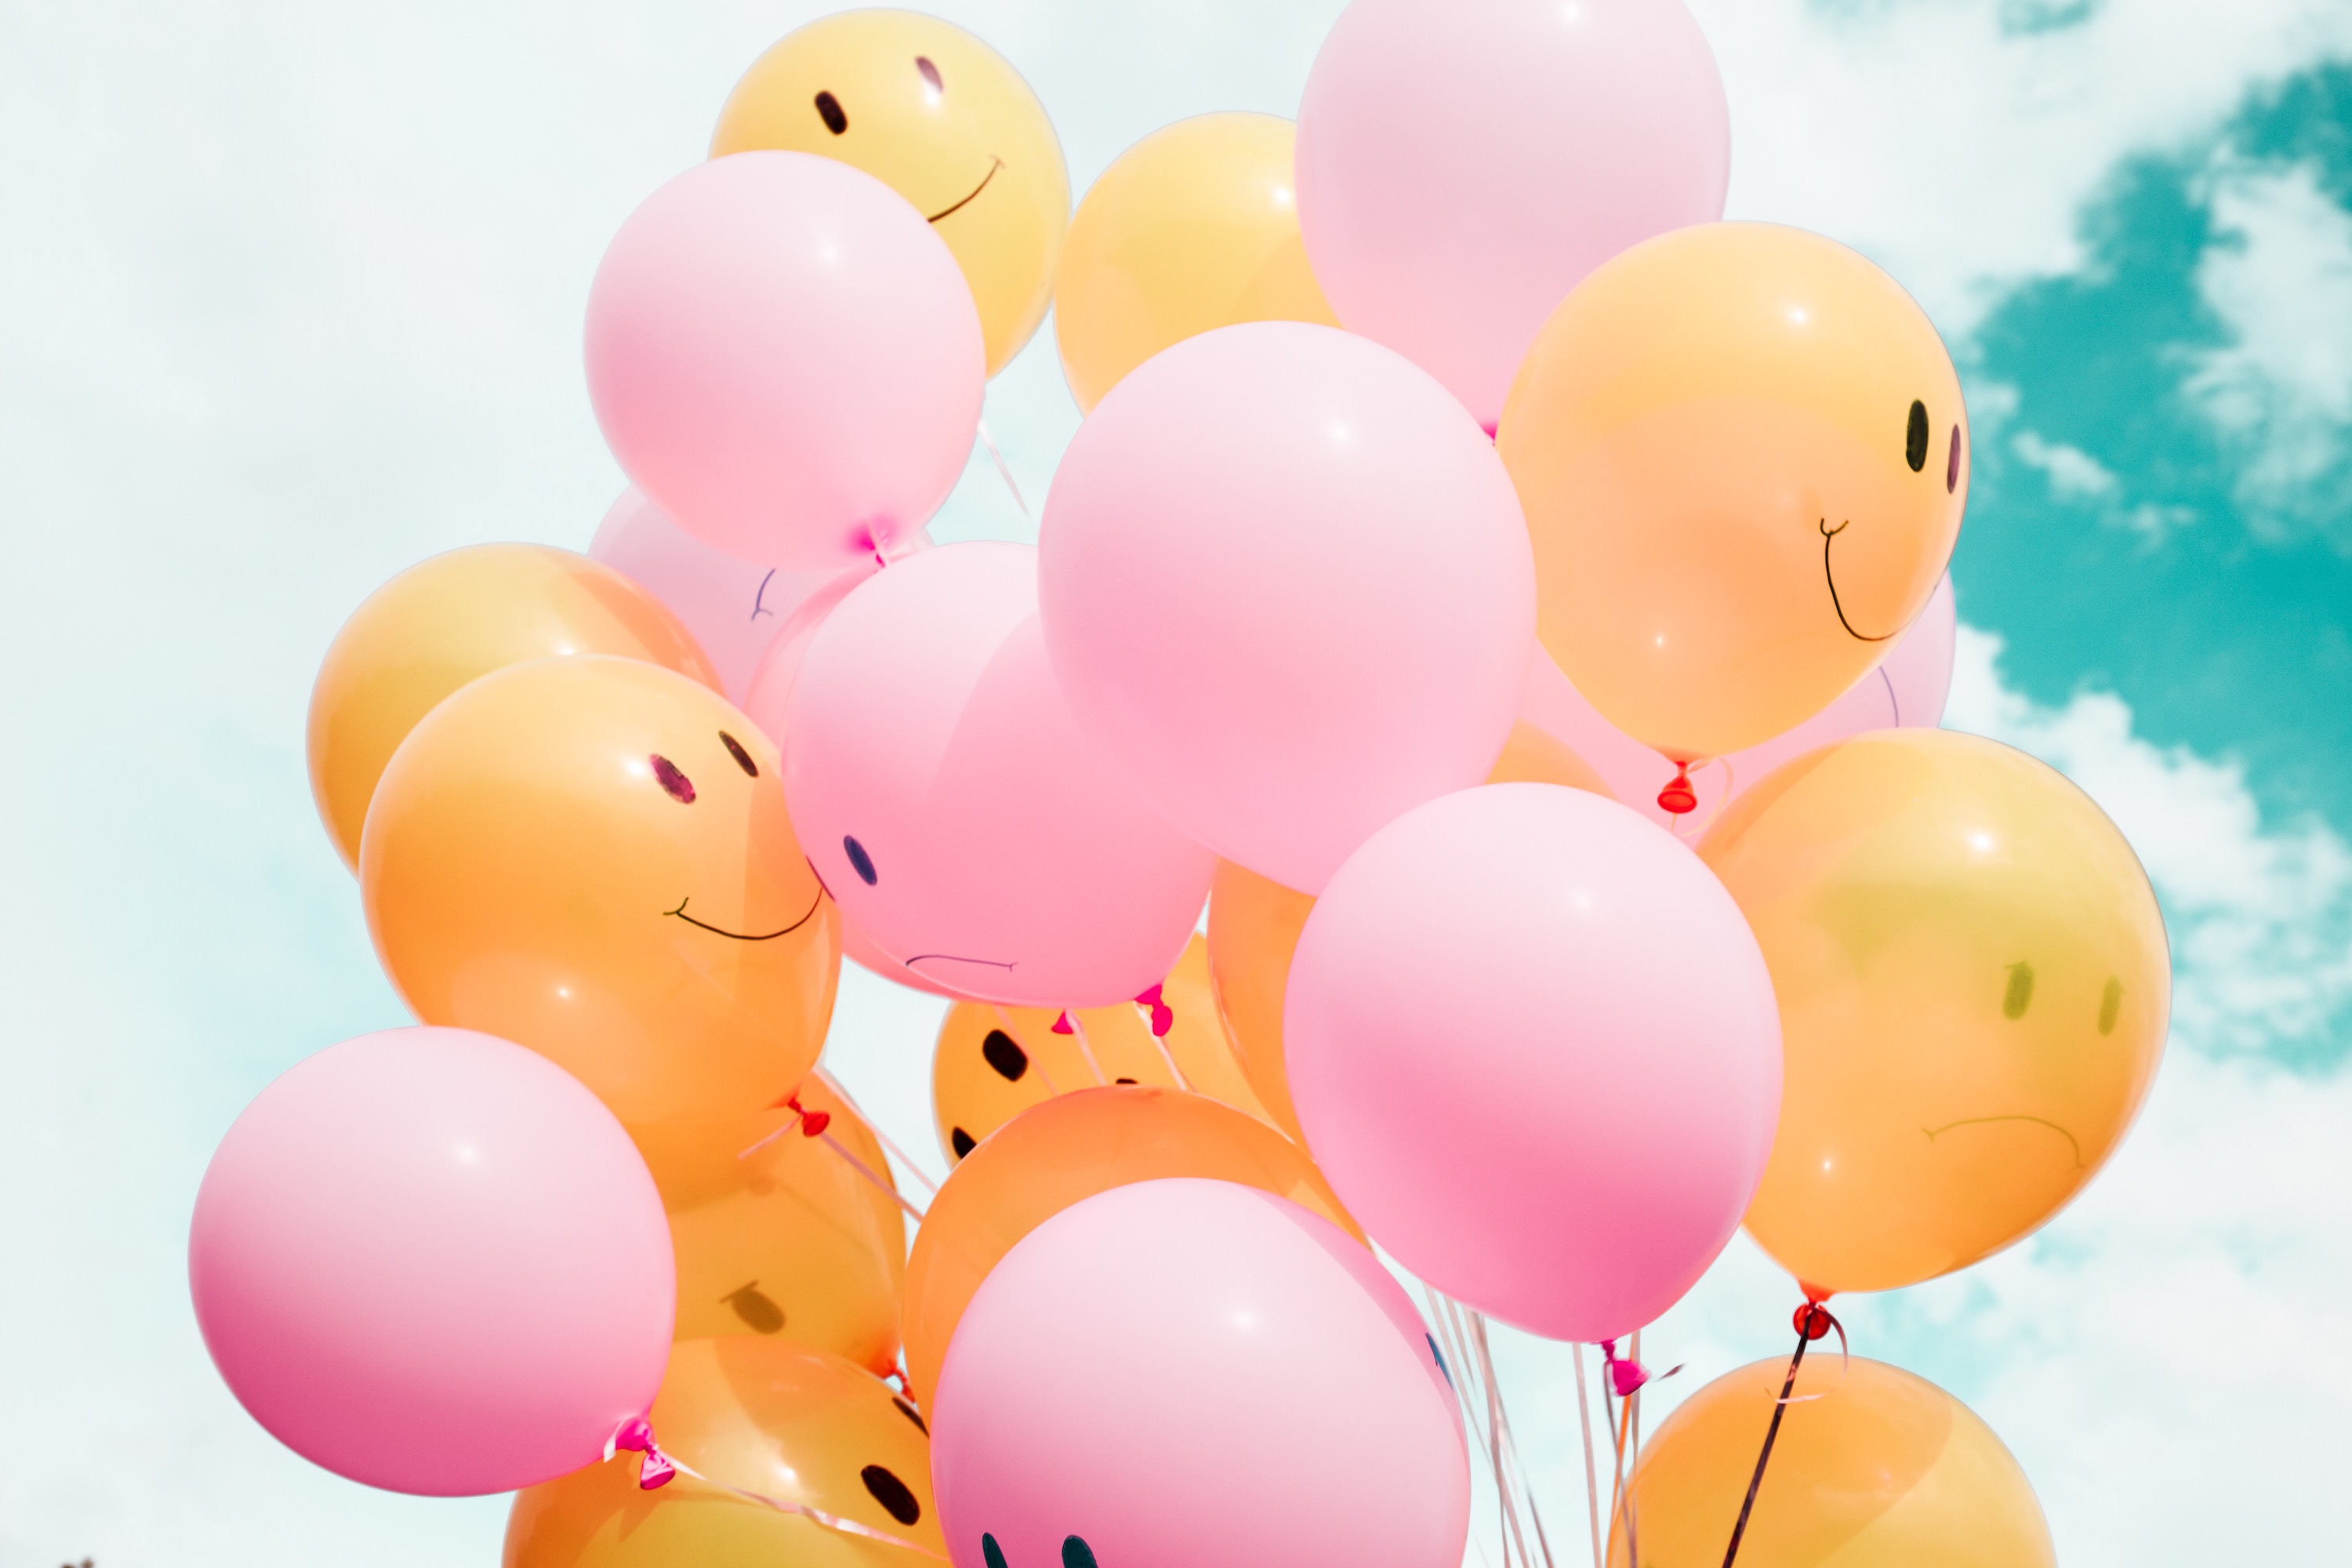 smiling balloons